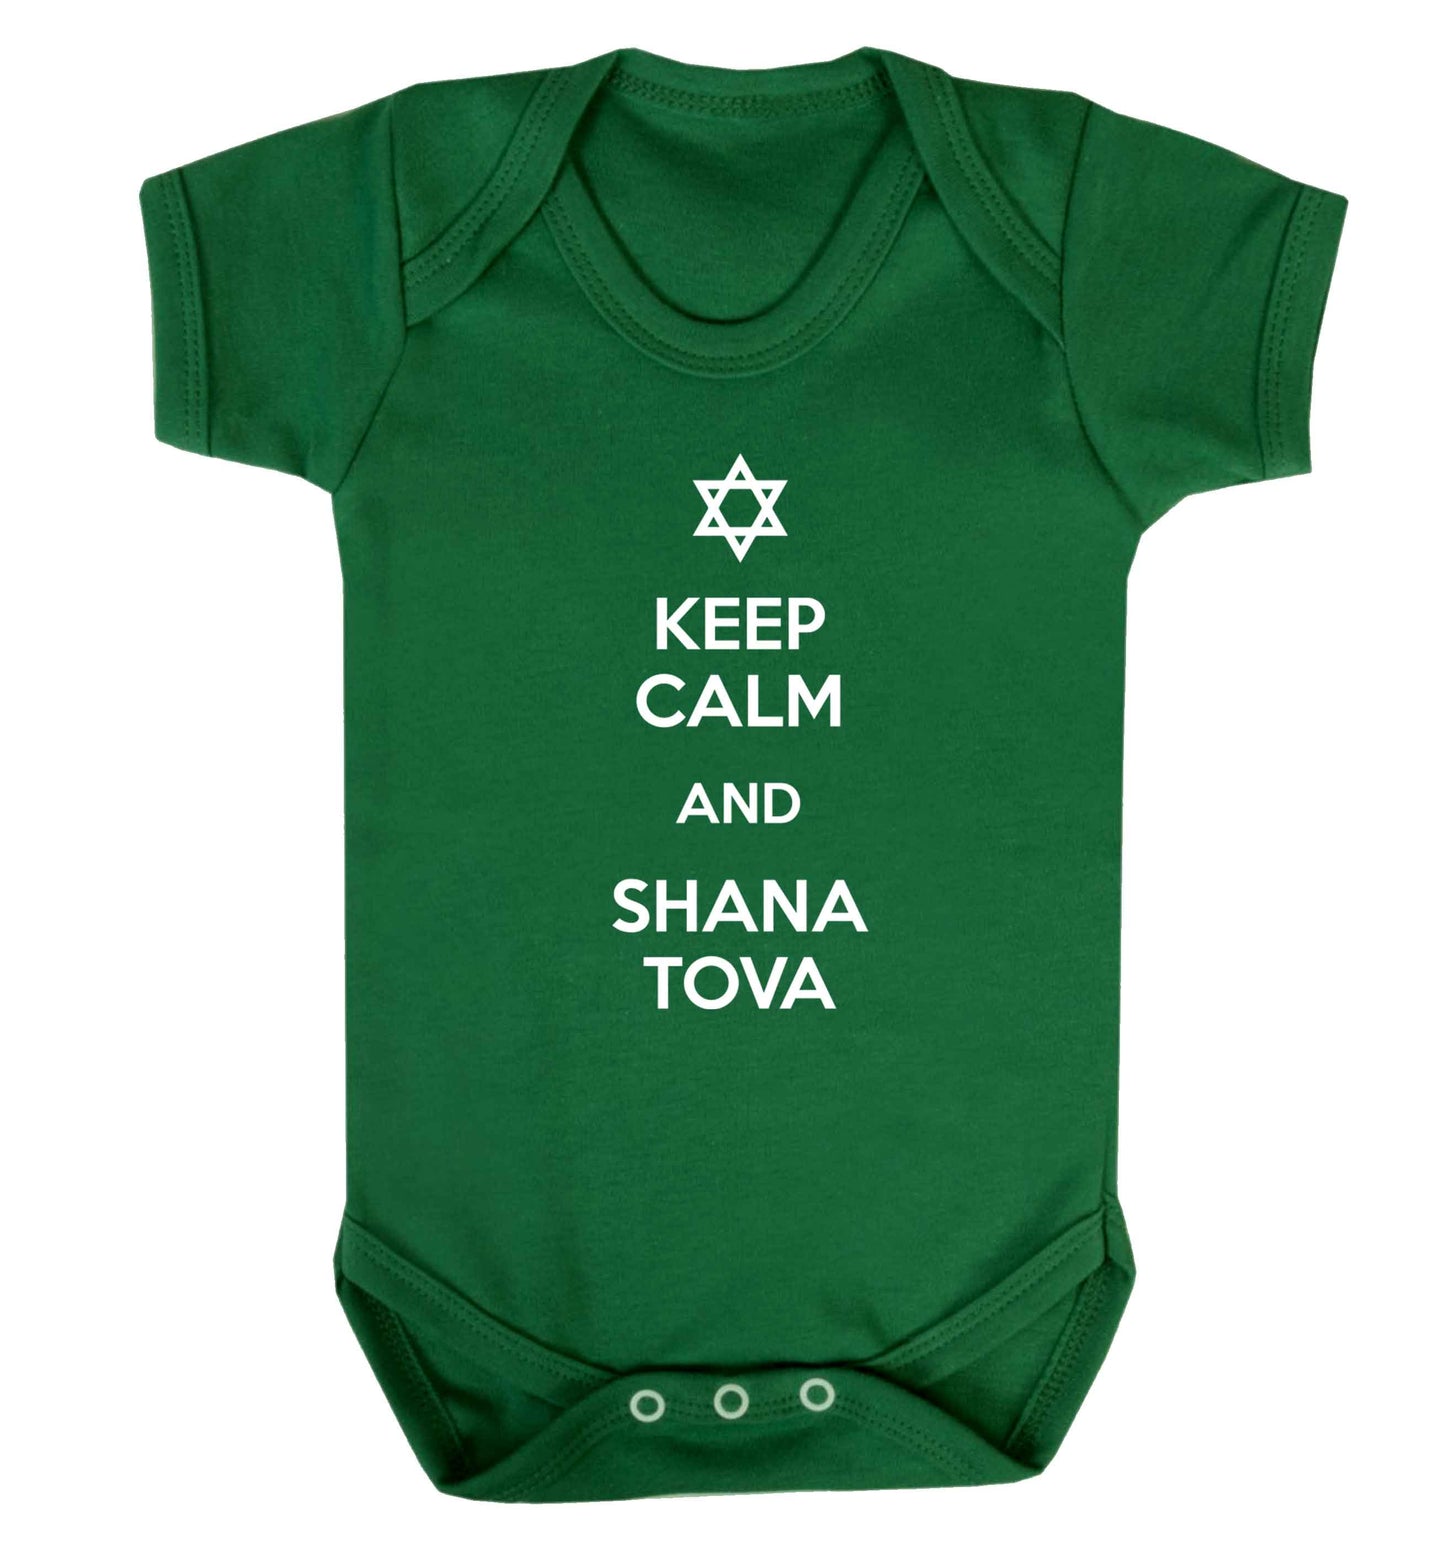 Keep calm and shana tova Baby Vest green 18-24 months